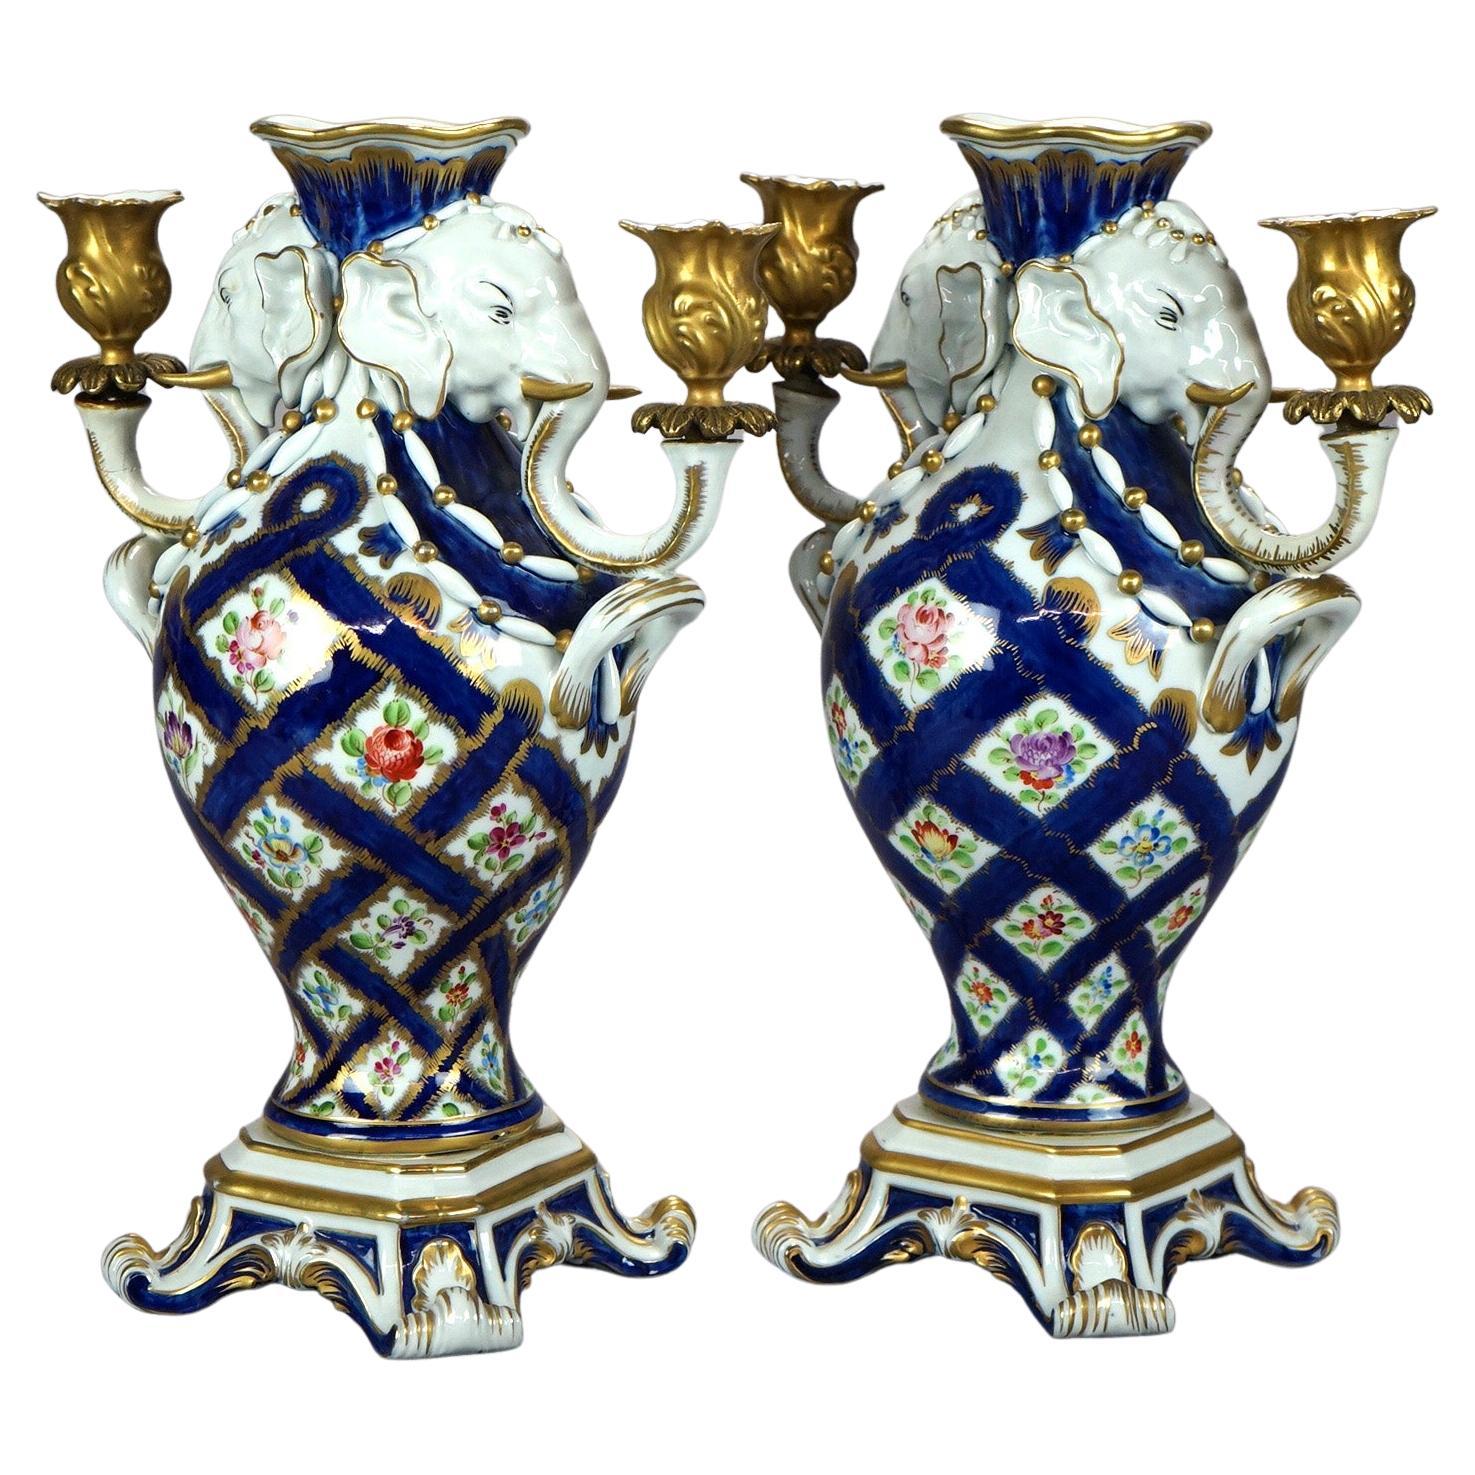 Italian Figural Porcelain Candelabra Urns with Elephants for Bonwit Teller 20thC For Sale